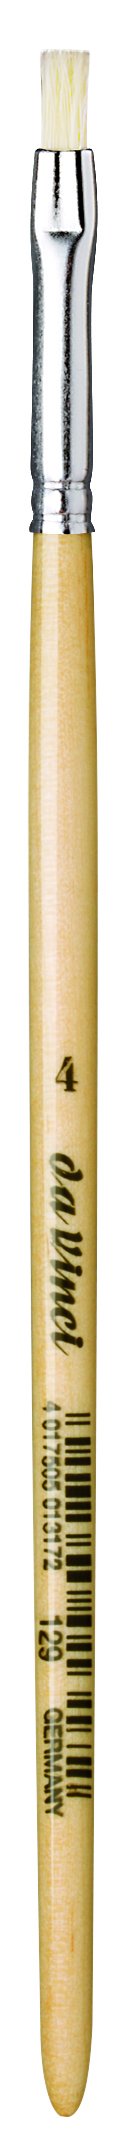 Pennelli Da Vinci Junior borste punta piatta setola sintetica n.4